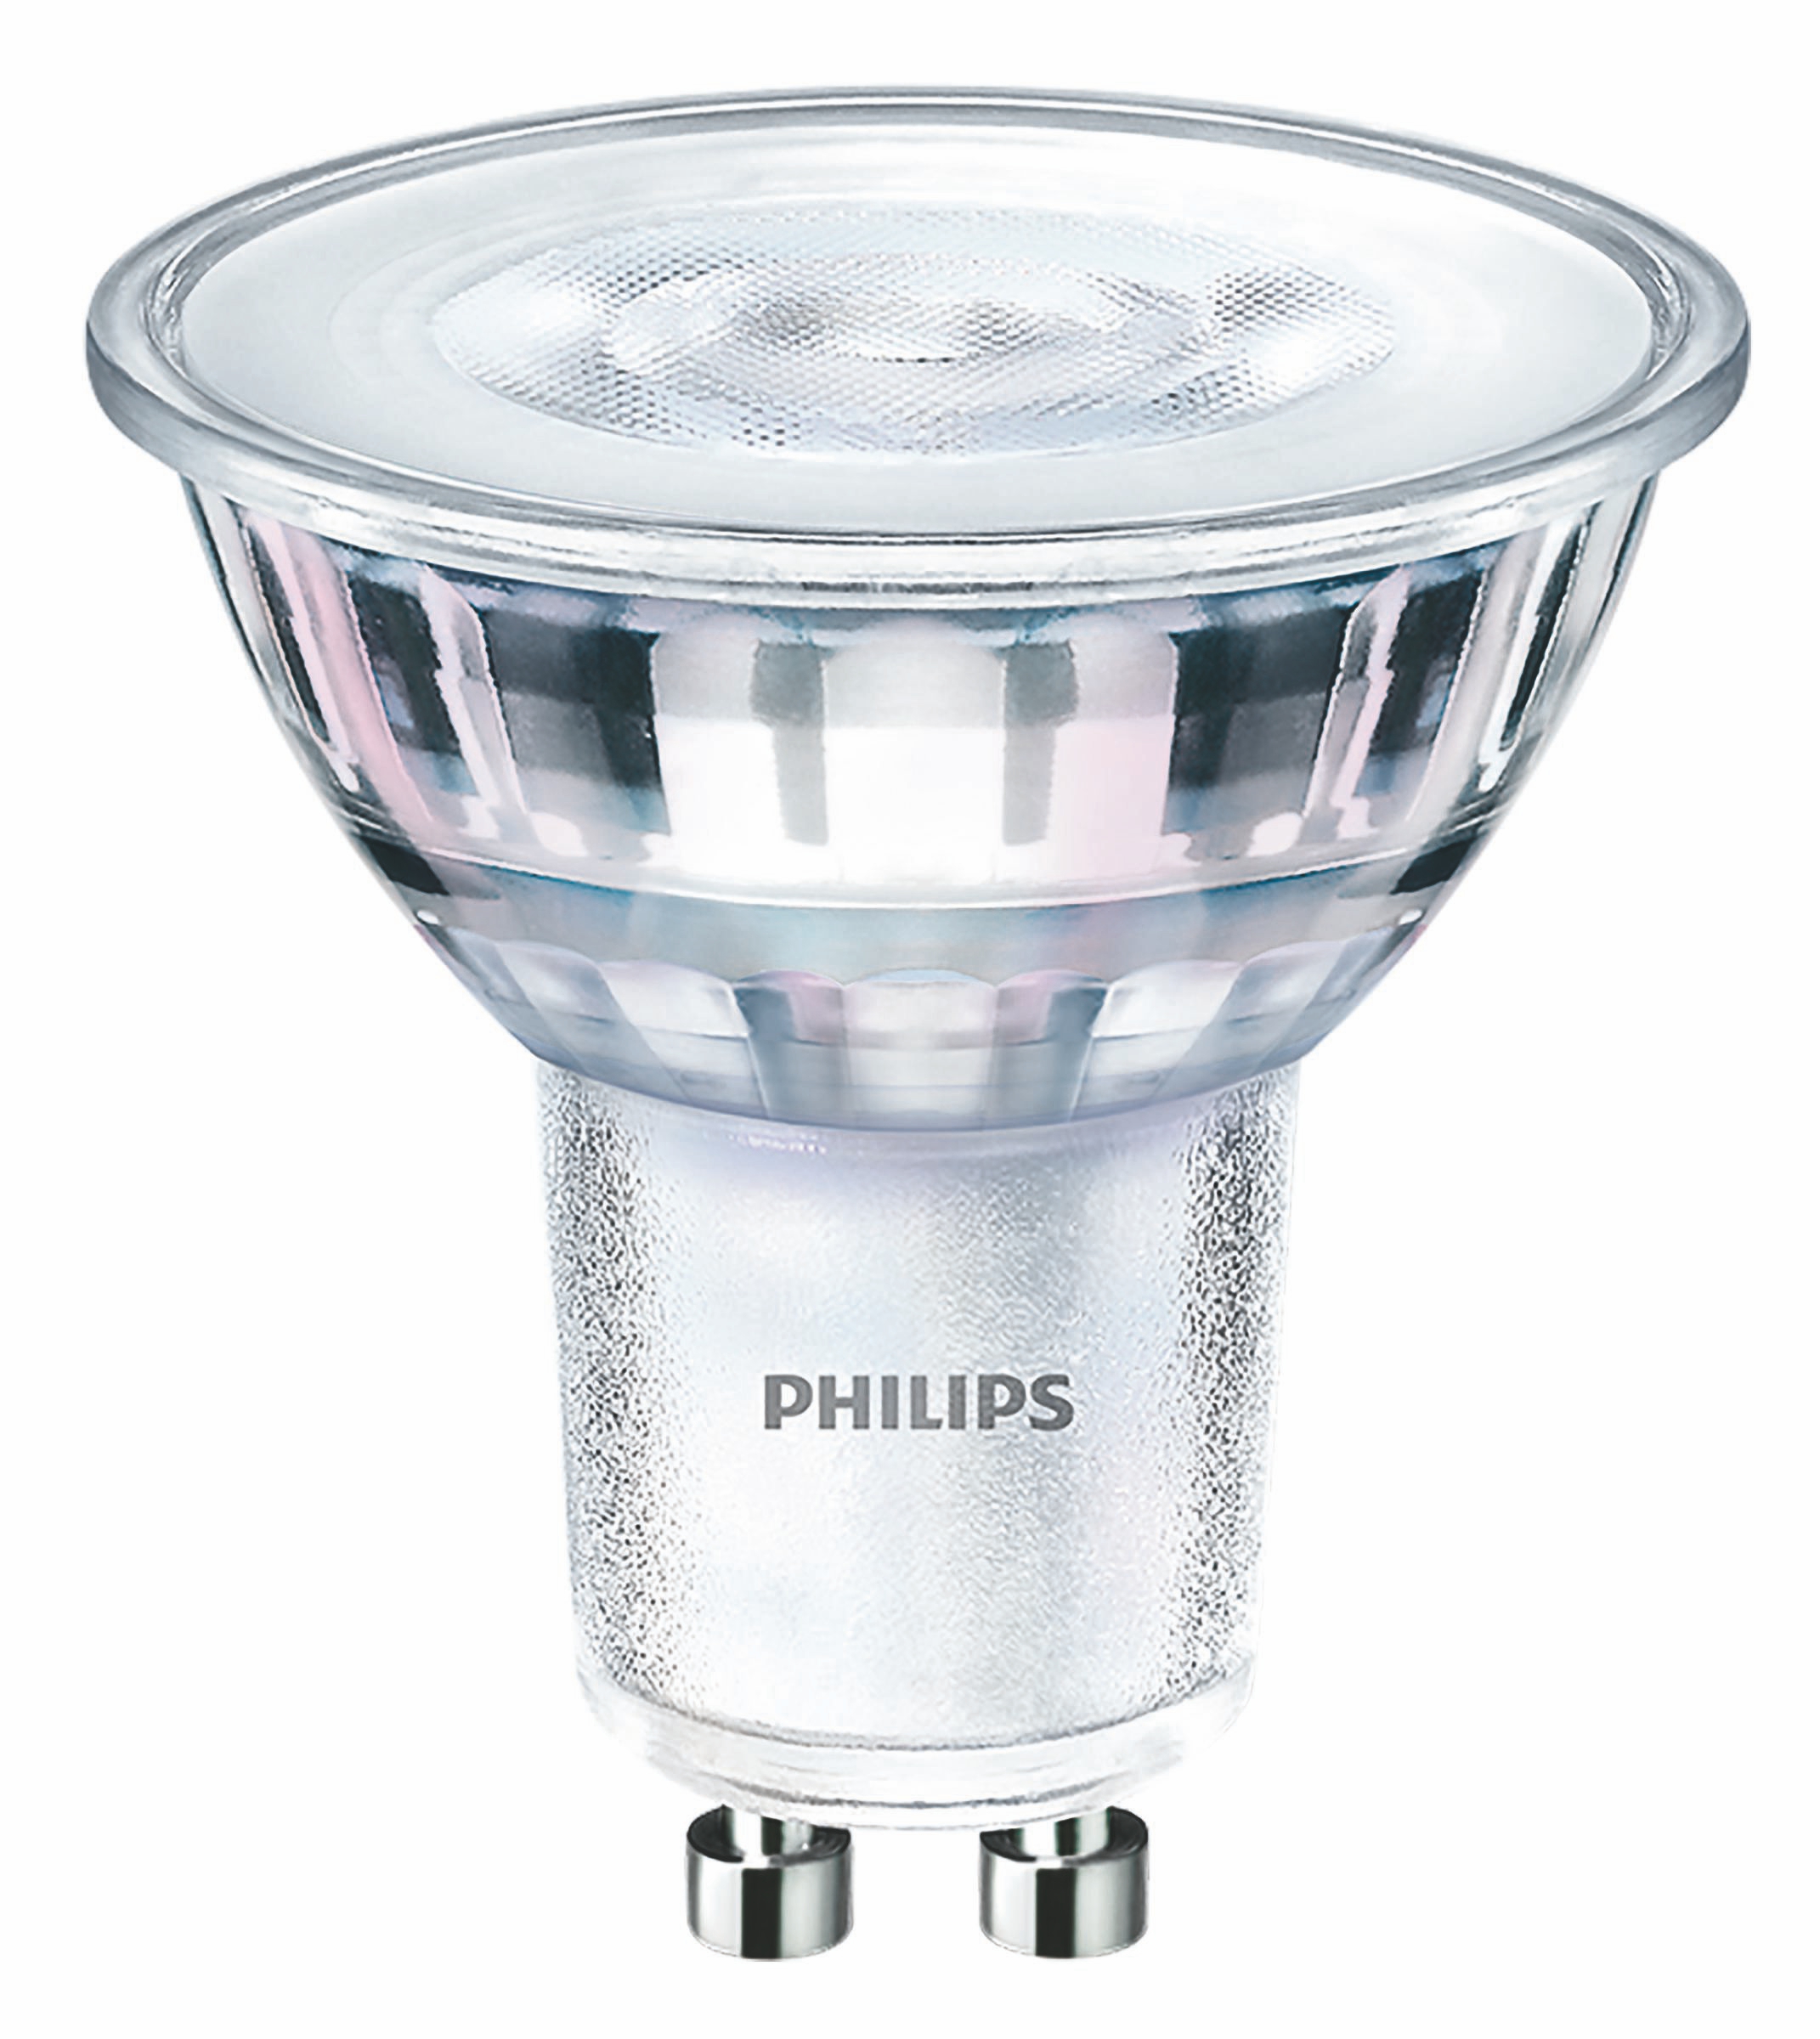 Philips 35883600 CorePro LEDspot Hochvolt-Reflektorlampen, 36 °, 4 W, 830, 345 lm, GU10, dimmbar